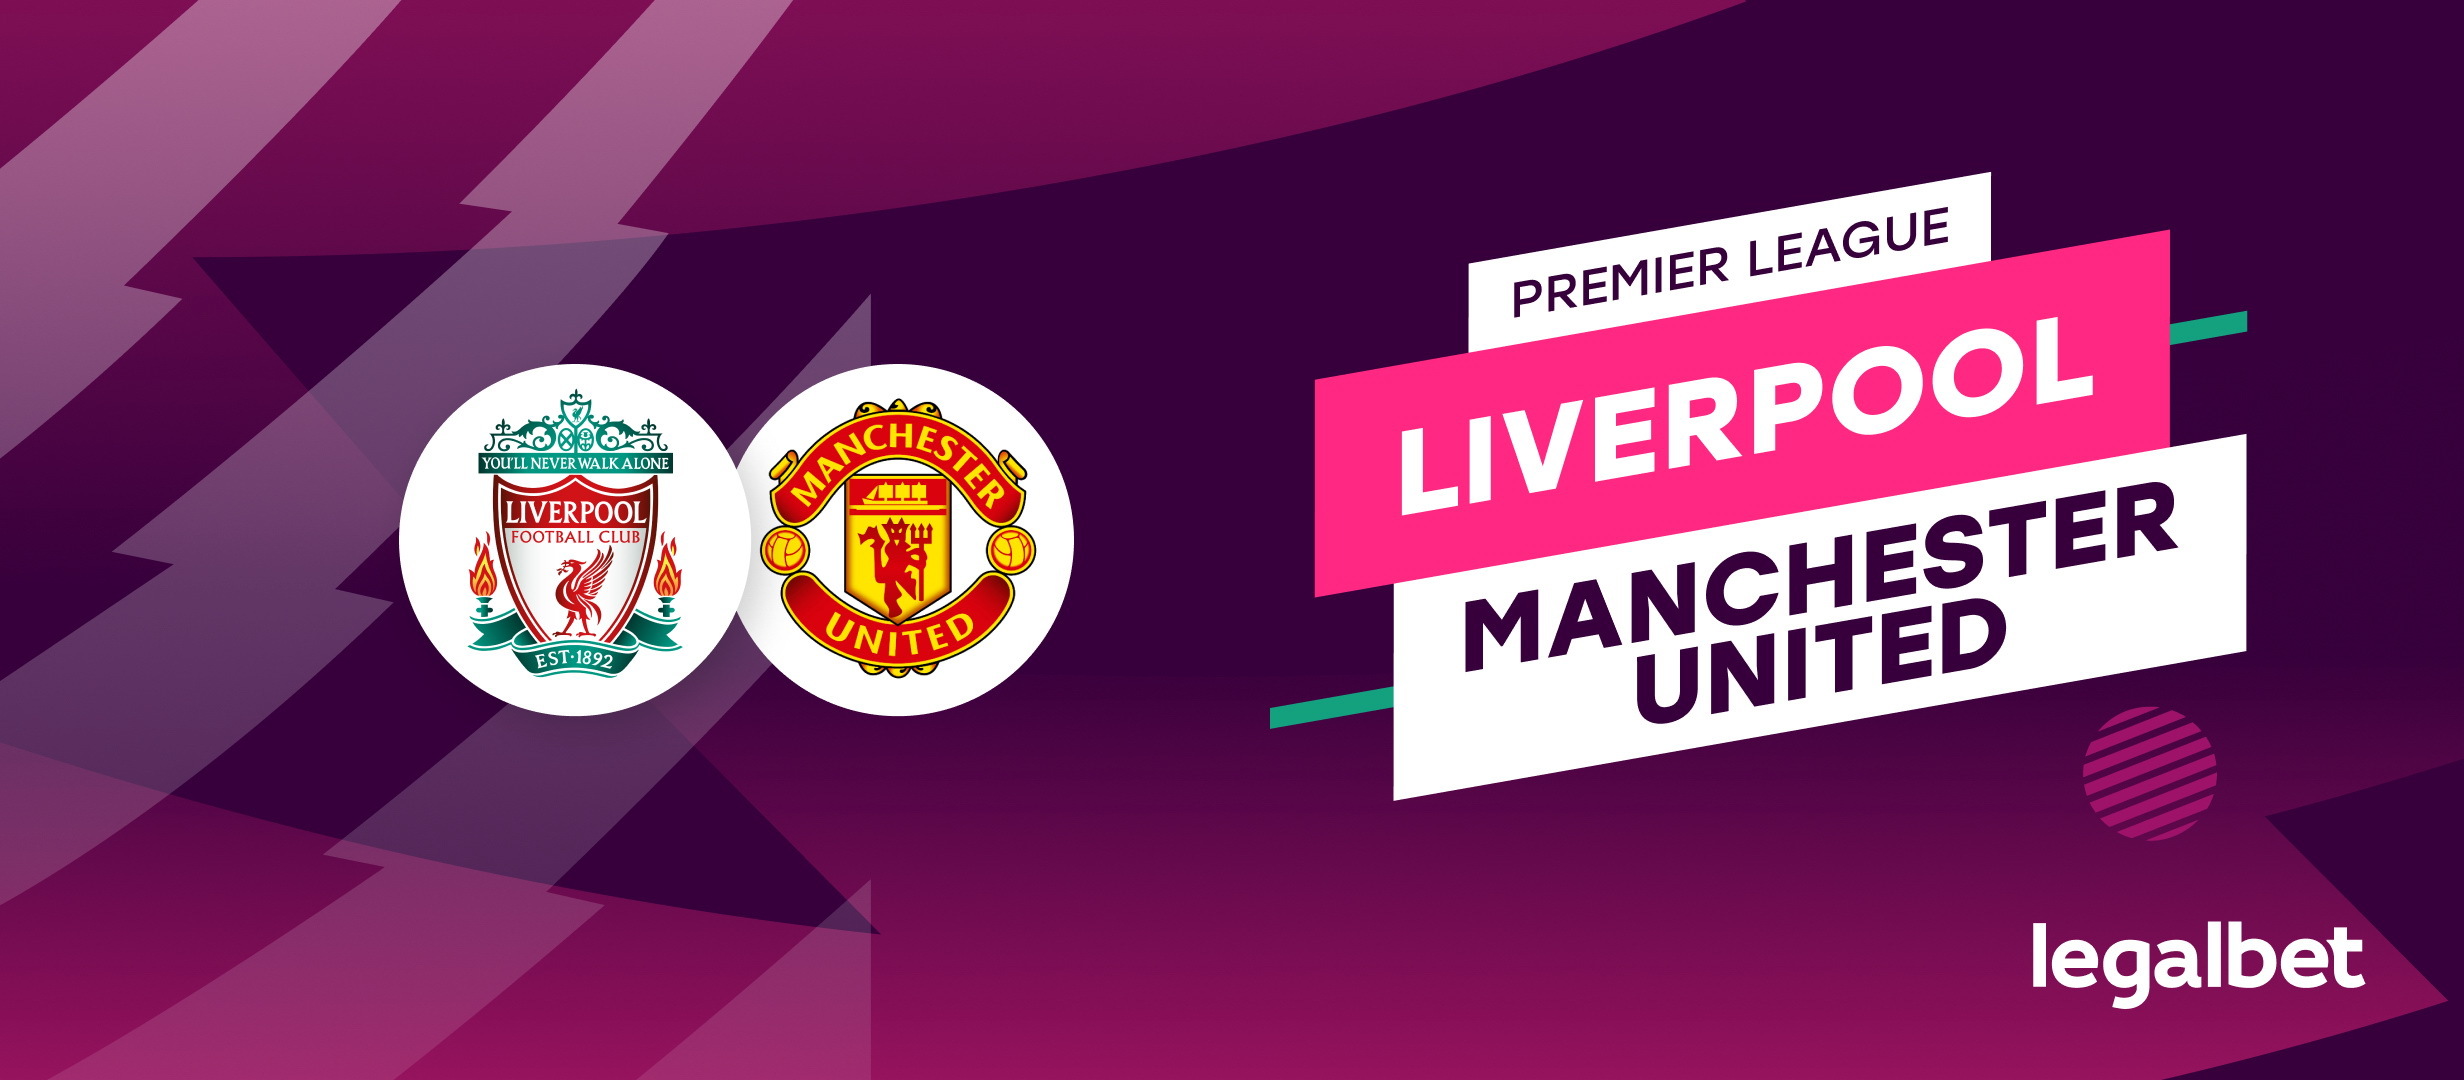 Liverpool - Manchester United, ponturi la pariuri Premier League